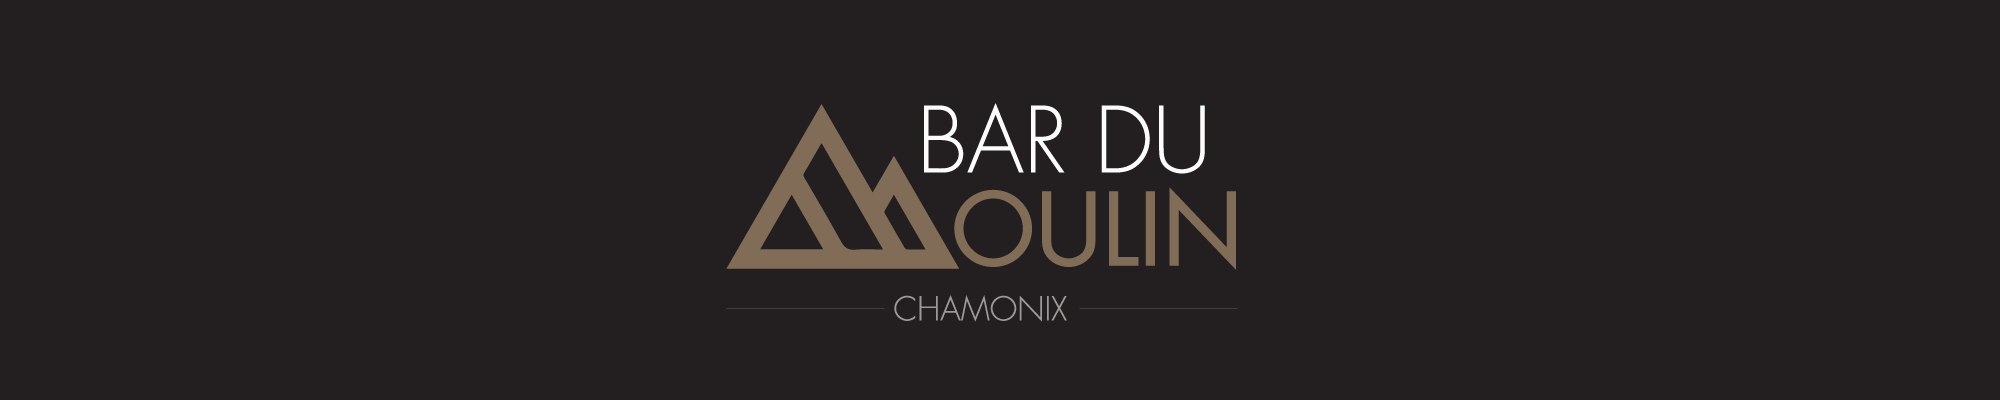 Bar-Du-moulin-2000x500